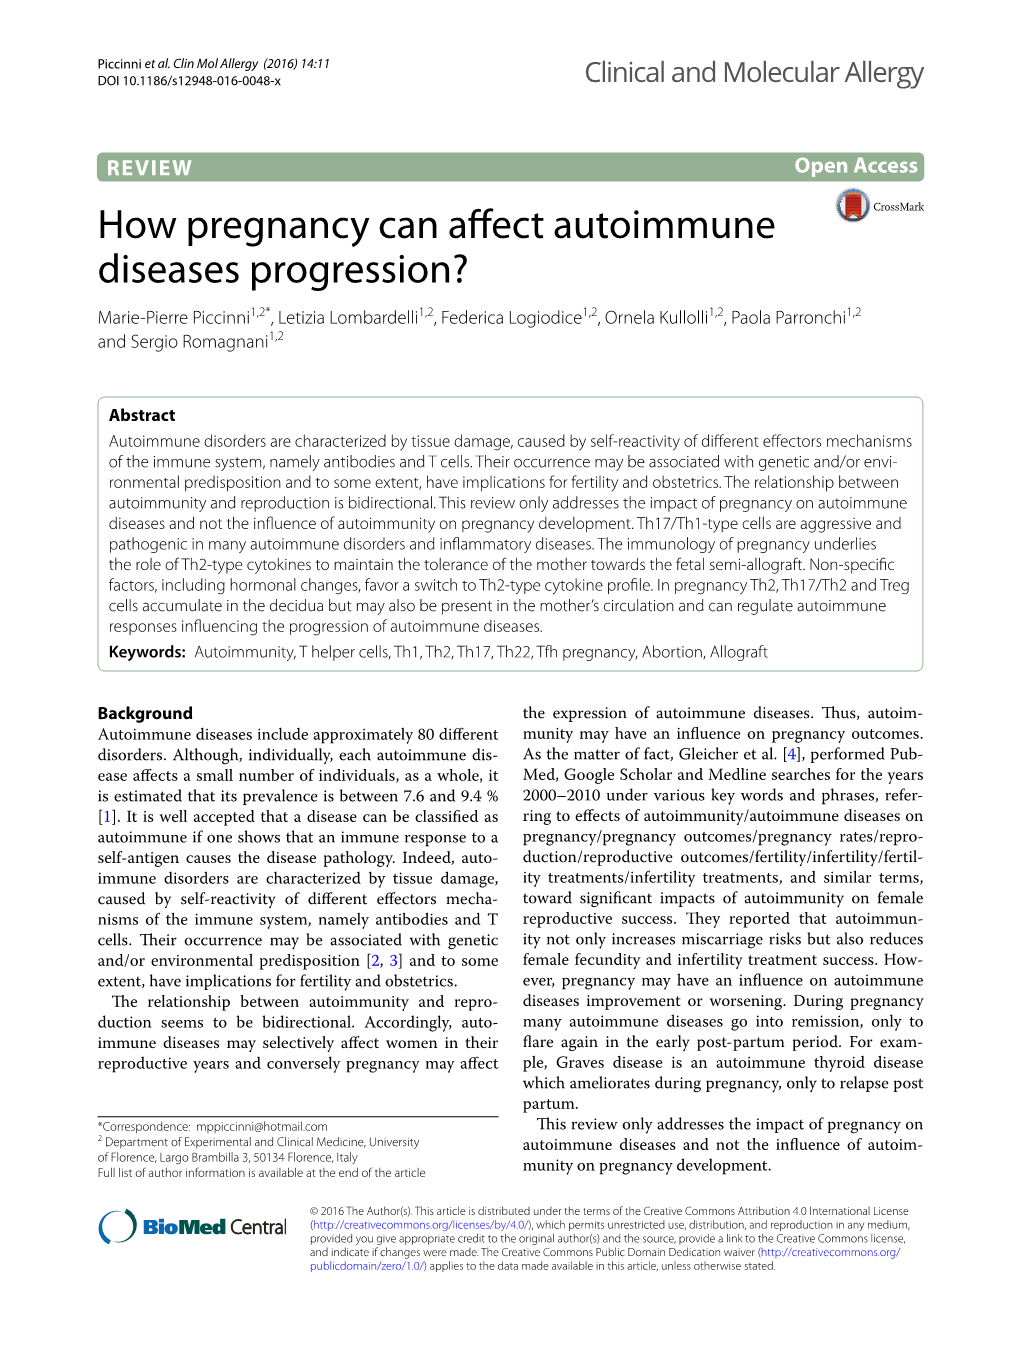 How Pregnancy Can Affect Autoimmune Diseases Progression?